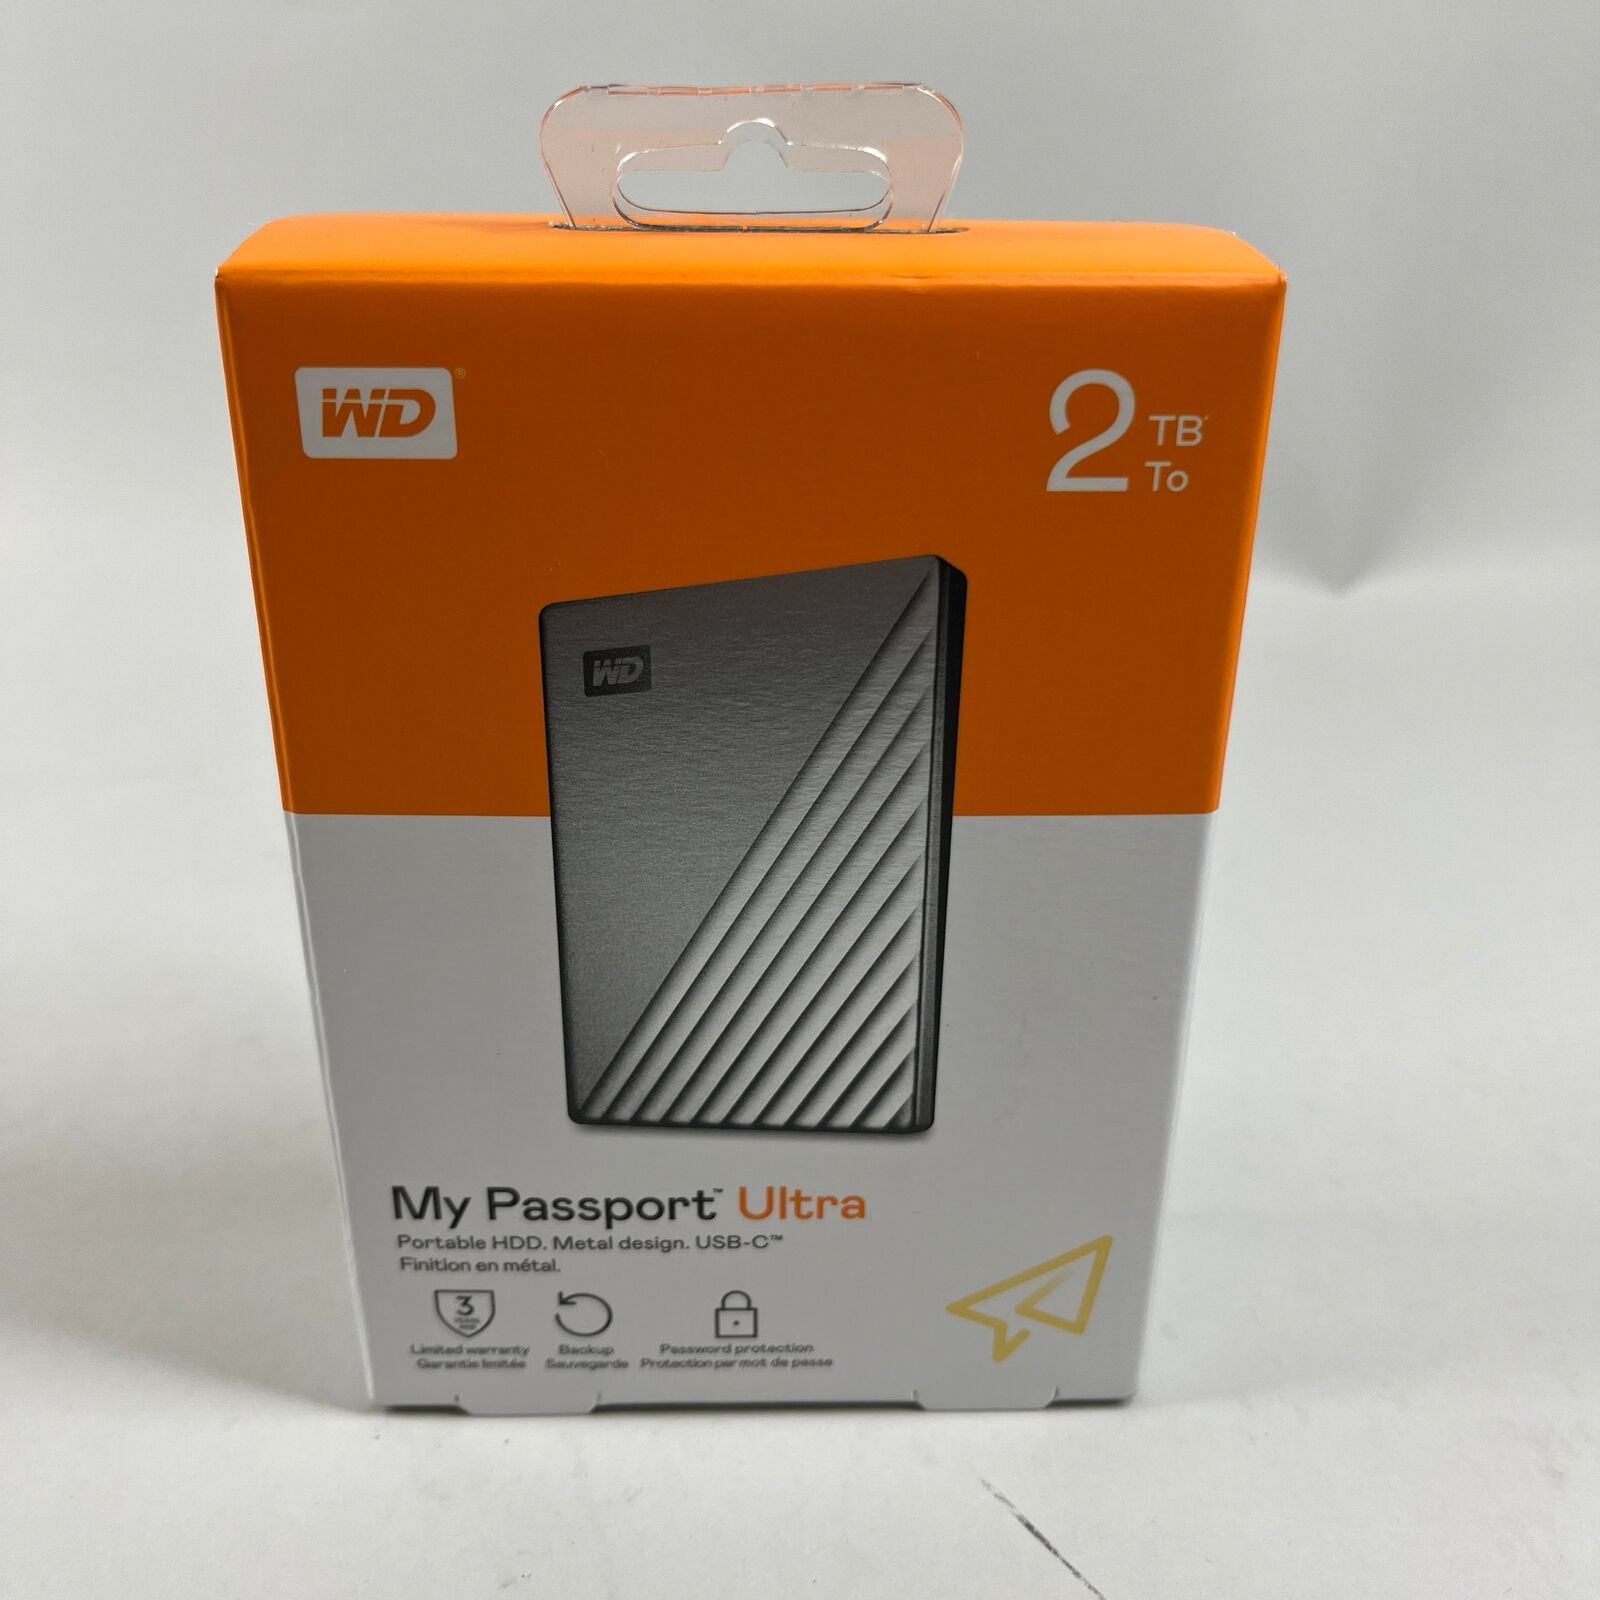 New WD My Passport Ultra 2TB External USB 3.0 Portable Hard Drive